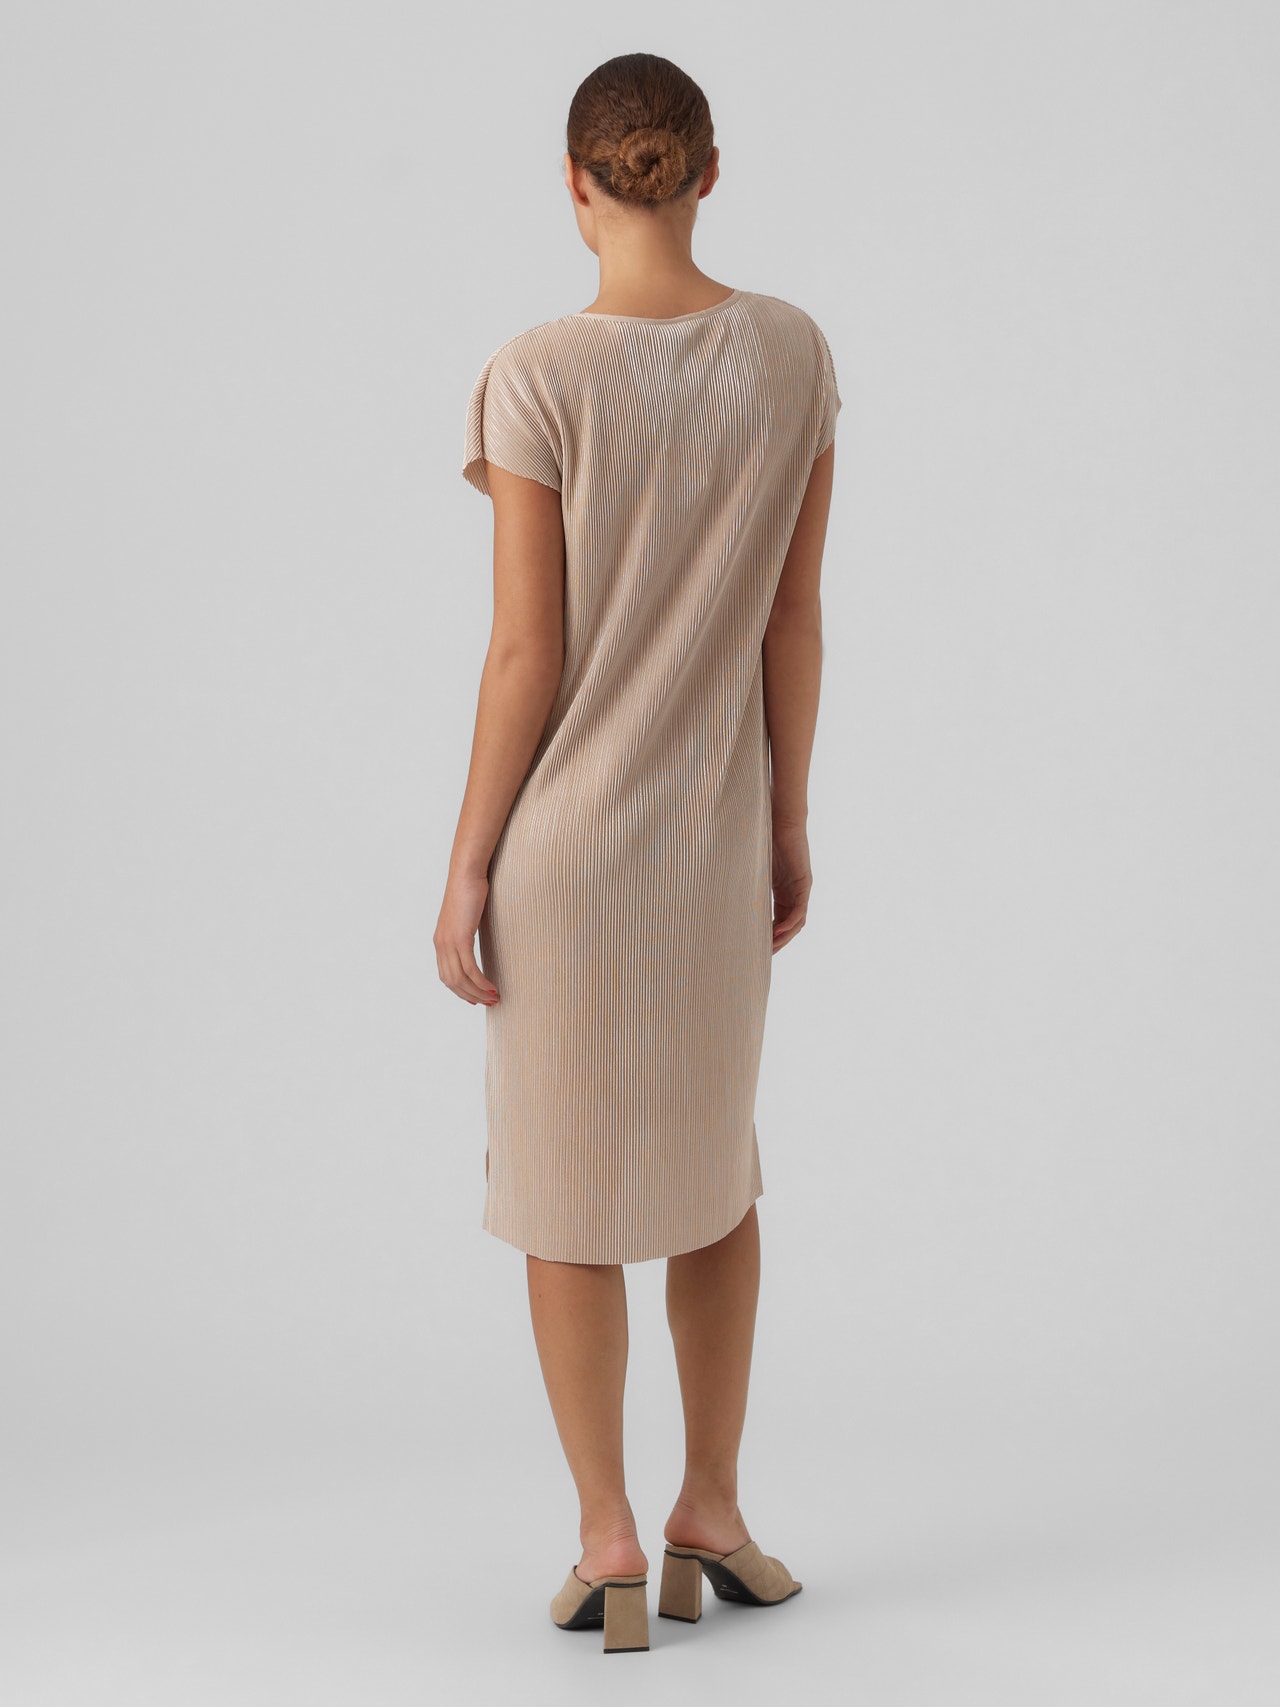 Manie Reizende handelaar hoek Korte jurk | Medium Grey | Vero Moda®